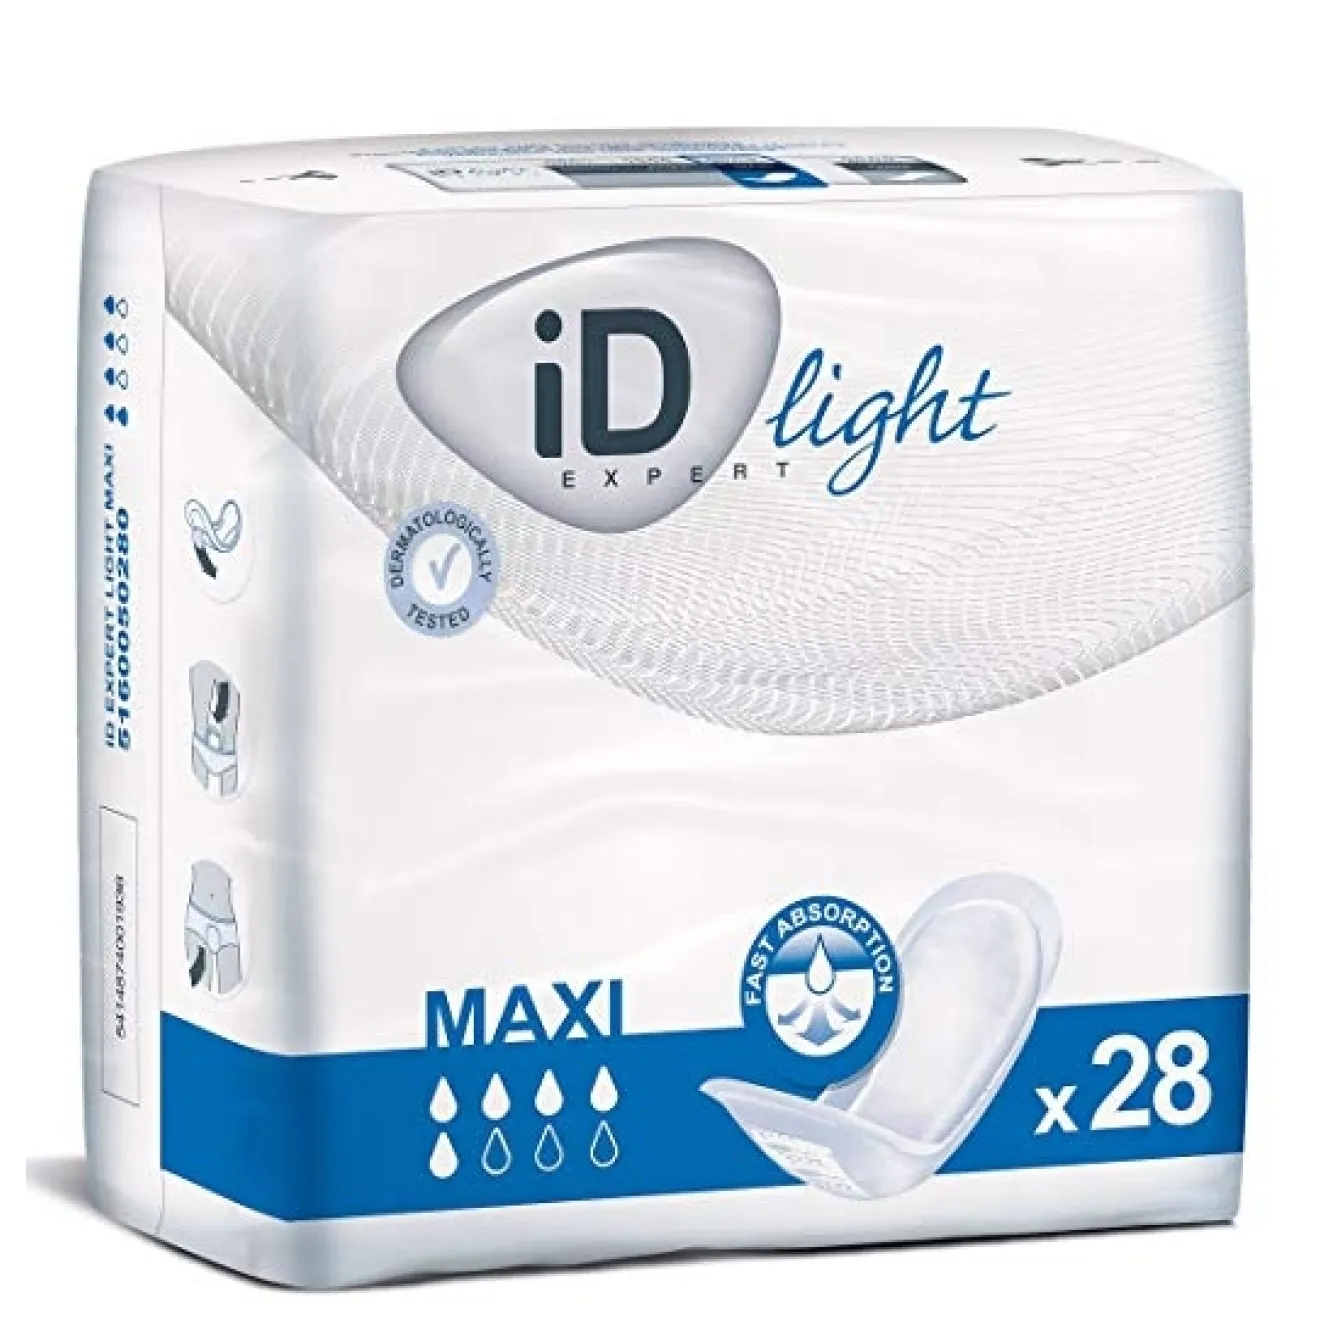 ID Expert light maxi 28 ST